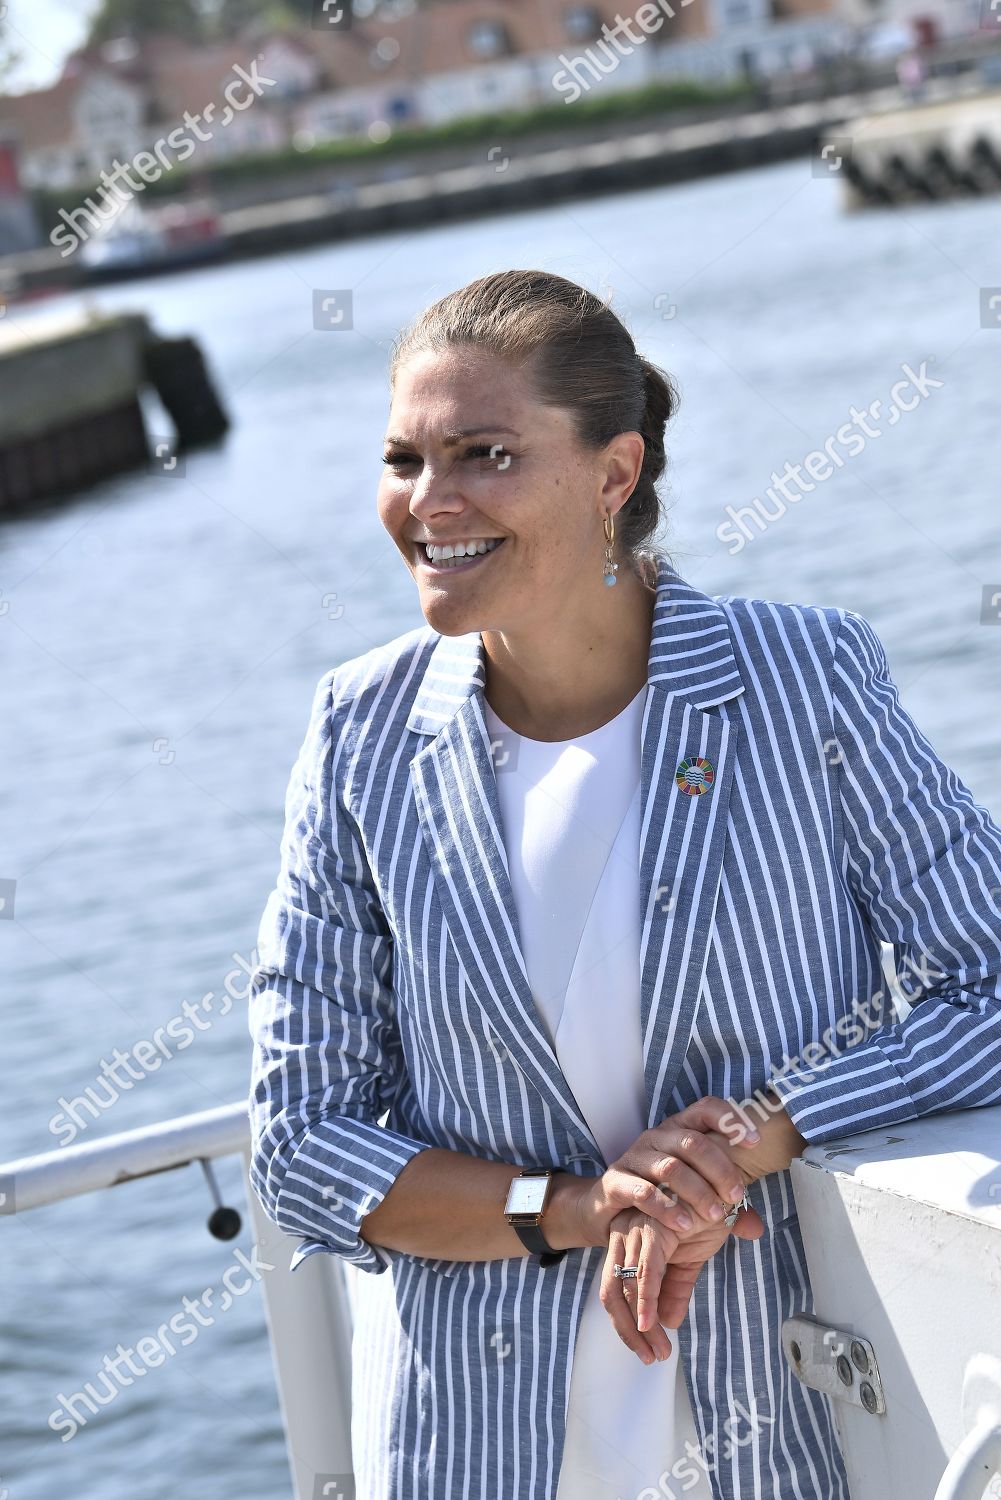 crown-princess-victoria-visits-the-centre-for-marine-research-simrishamn-sweden-shutterstock-editorial-10369010aa.jpg